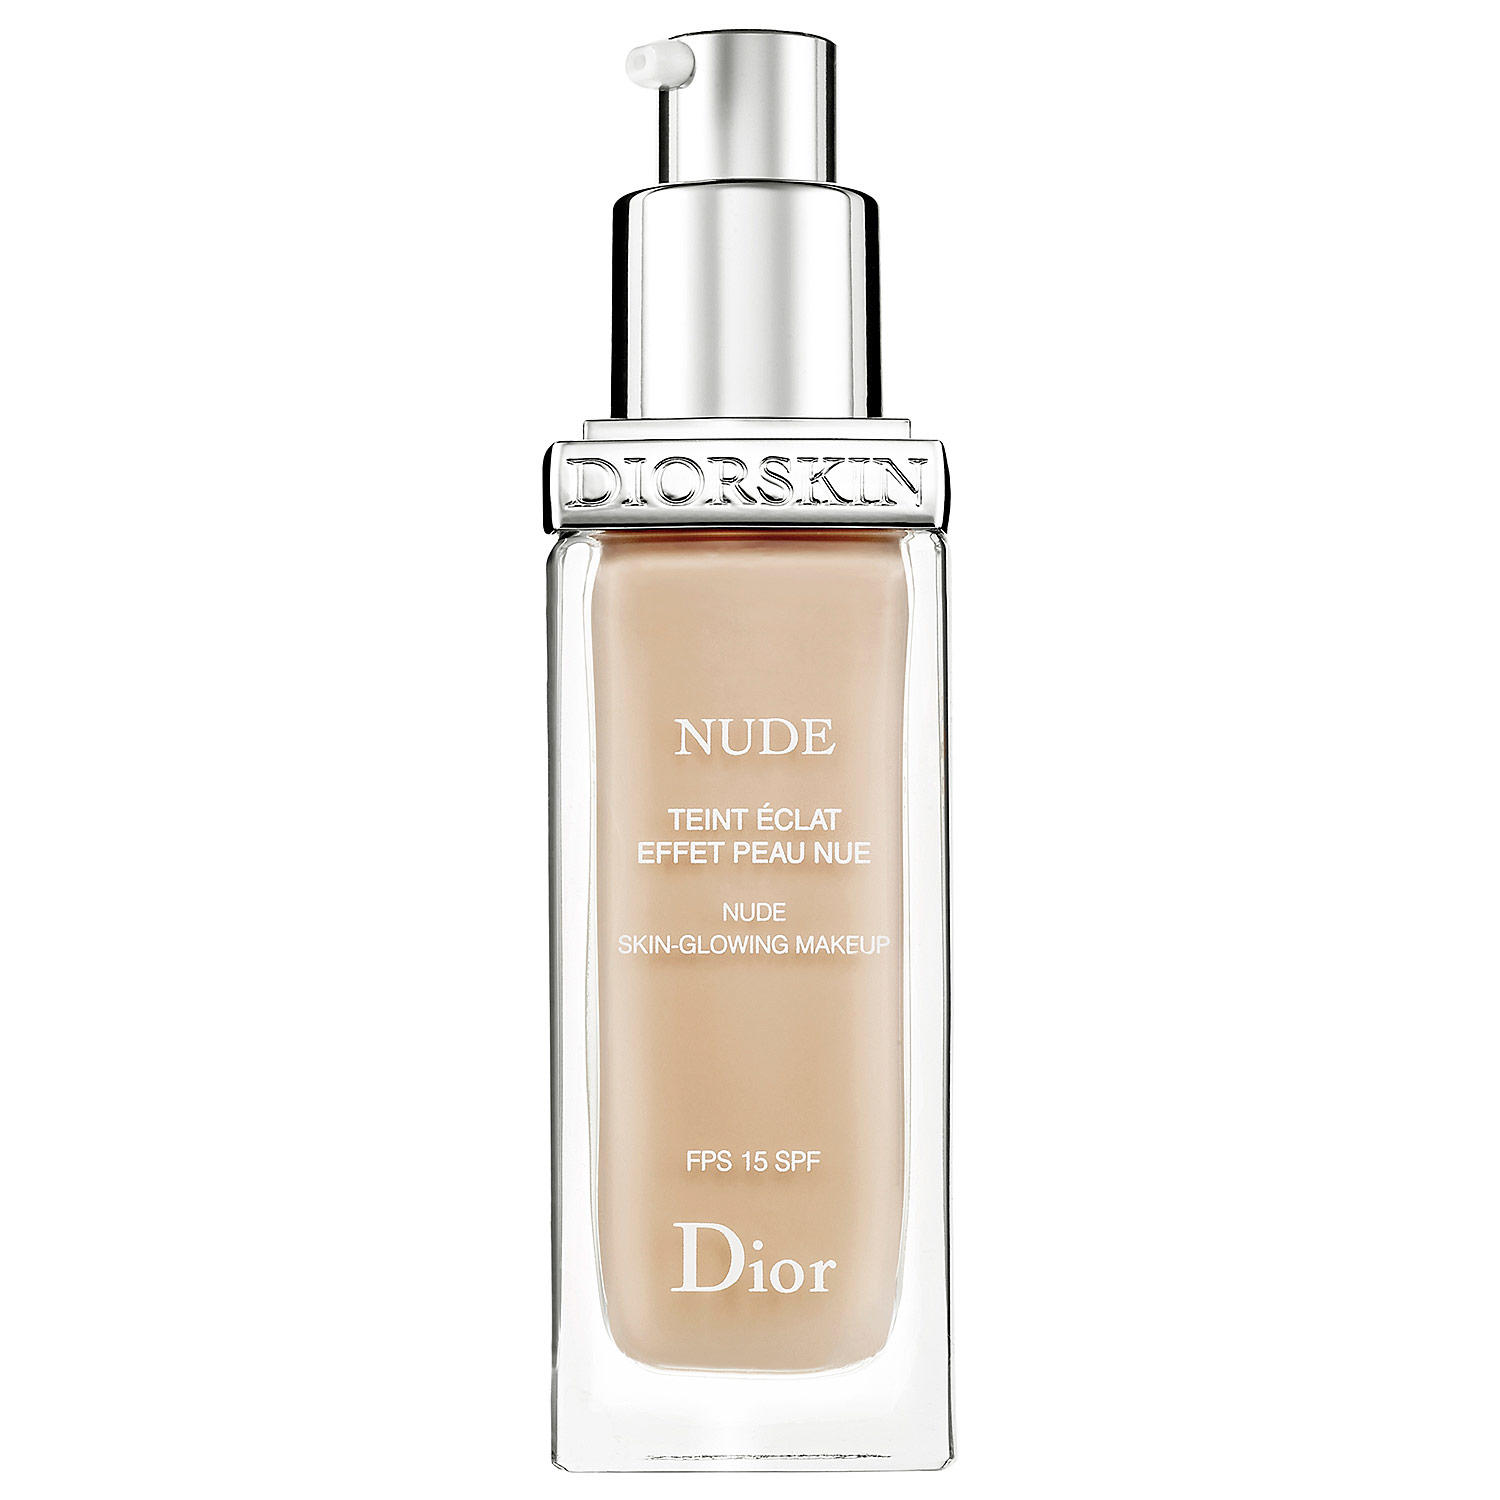 Dior DiorSkin Nude Skin-Glowing Makeup Light Beige 020